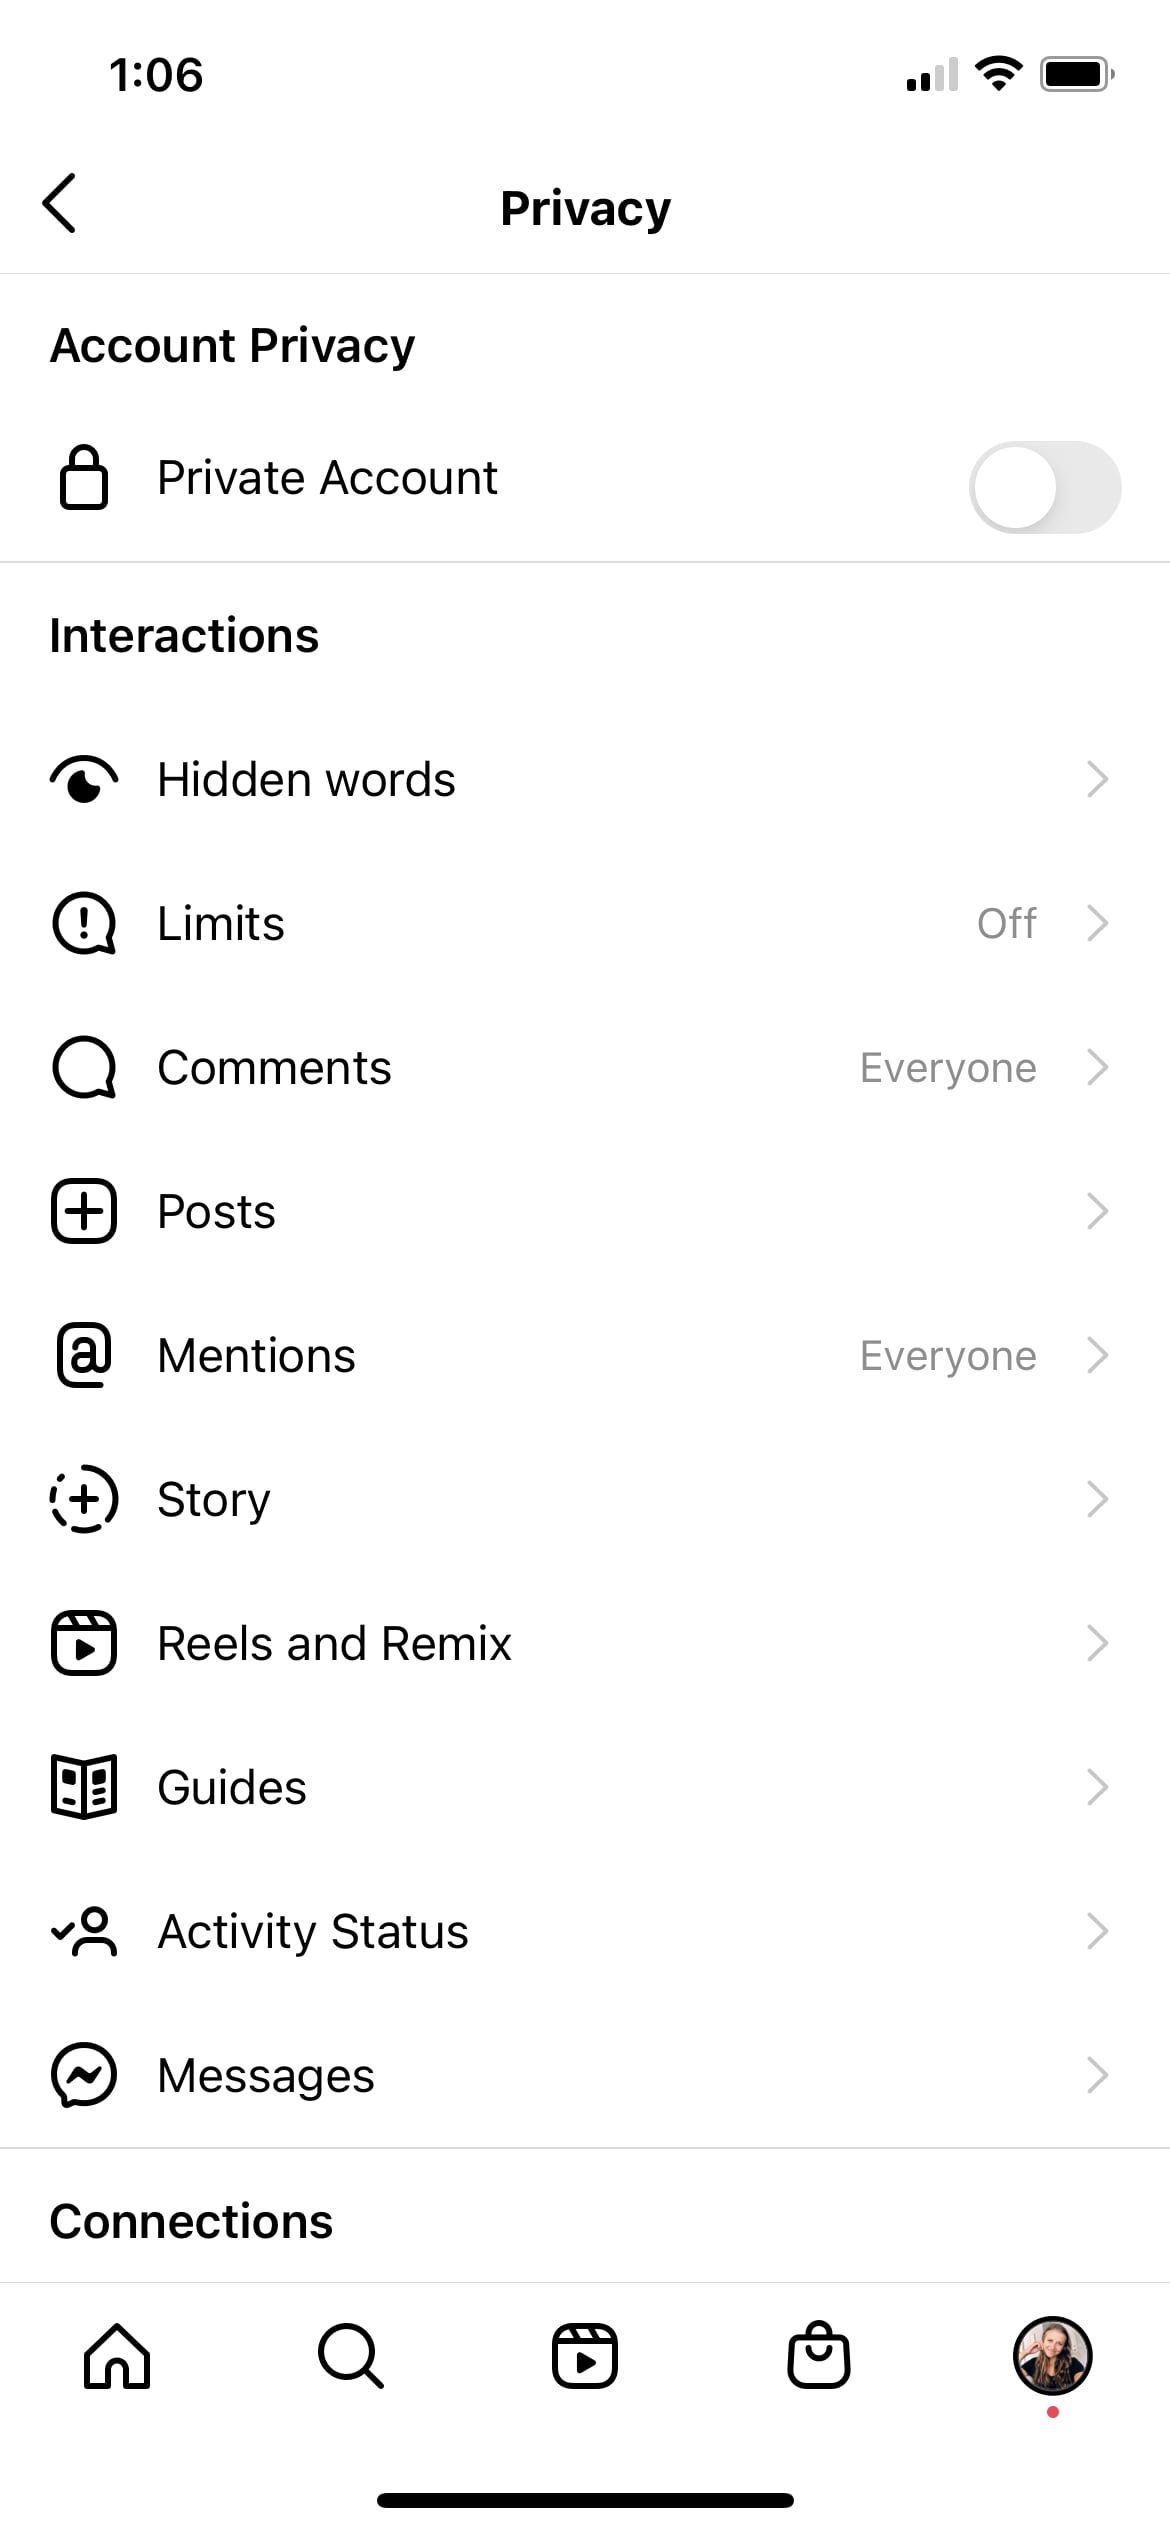 Screenshot of Instagram Privacy Settings